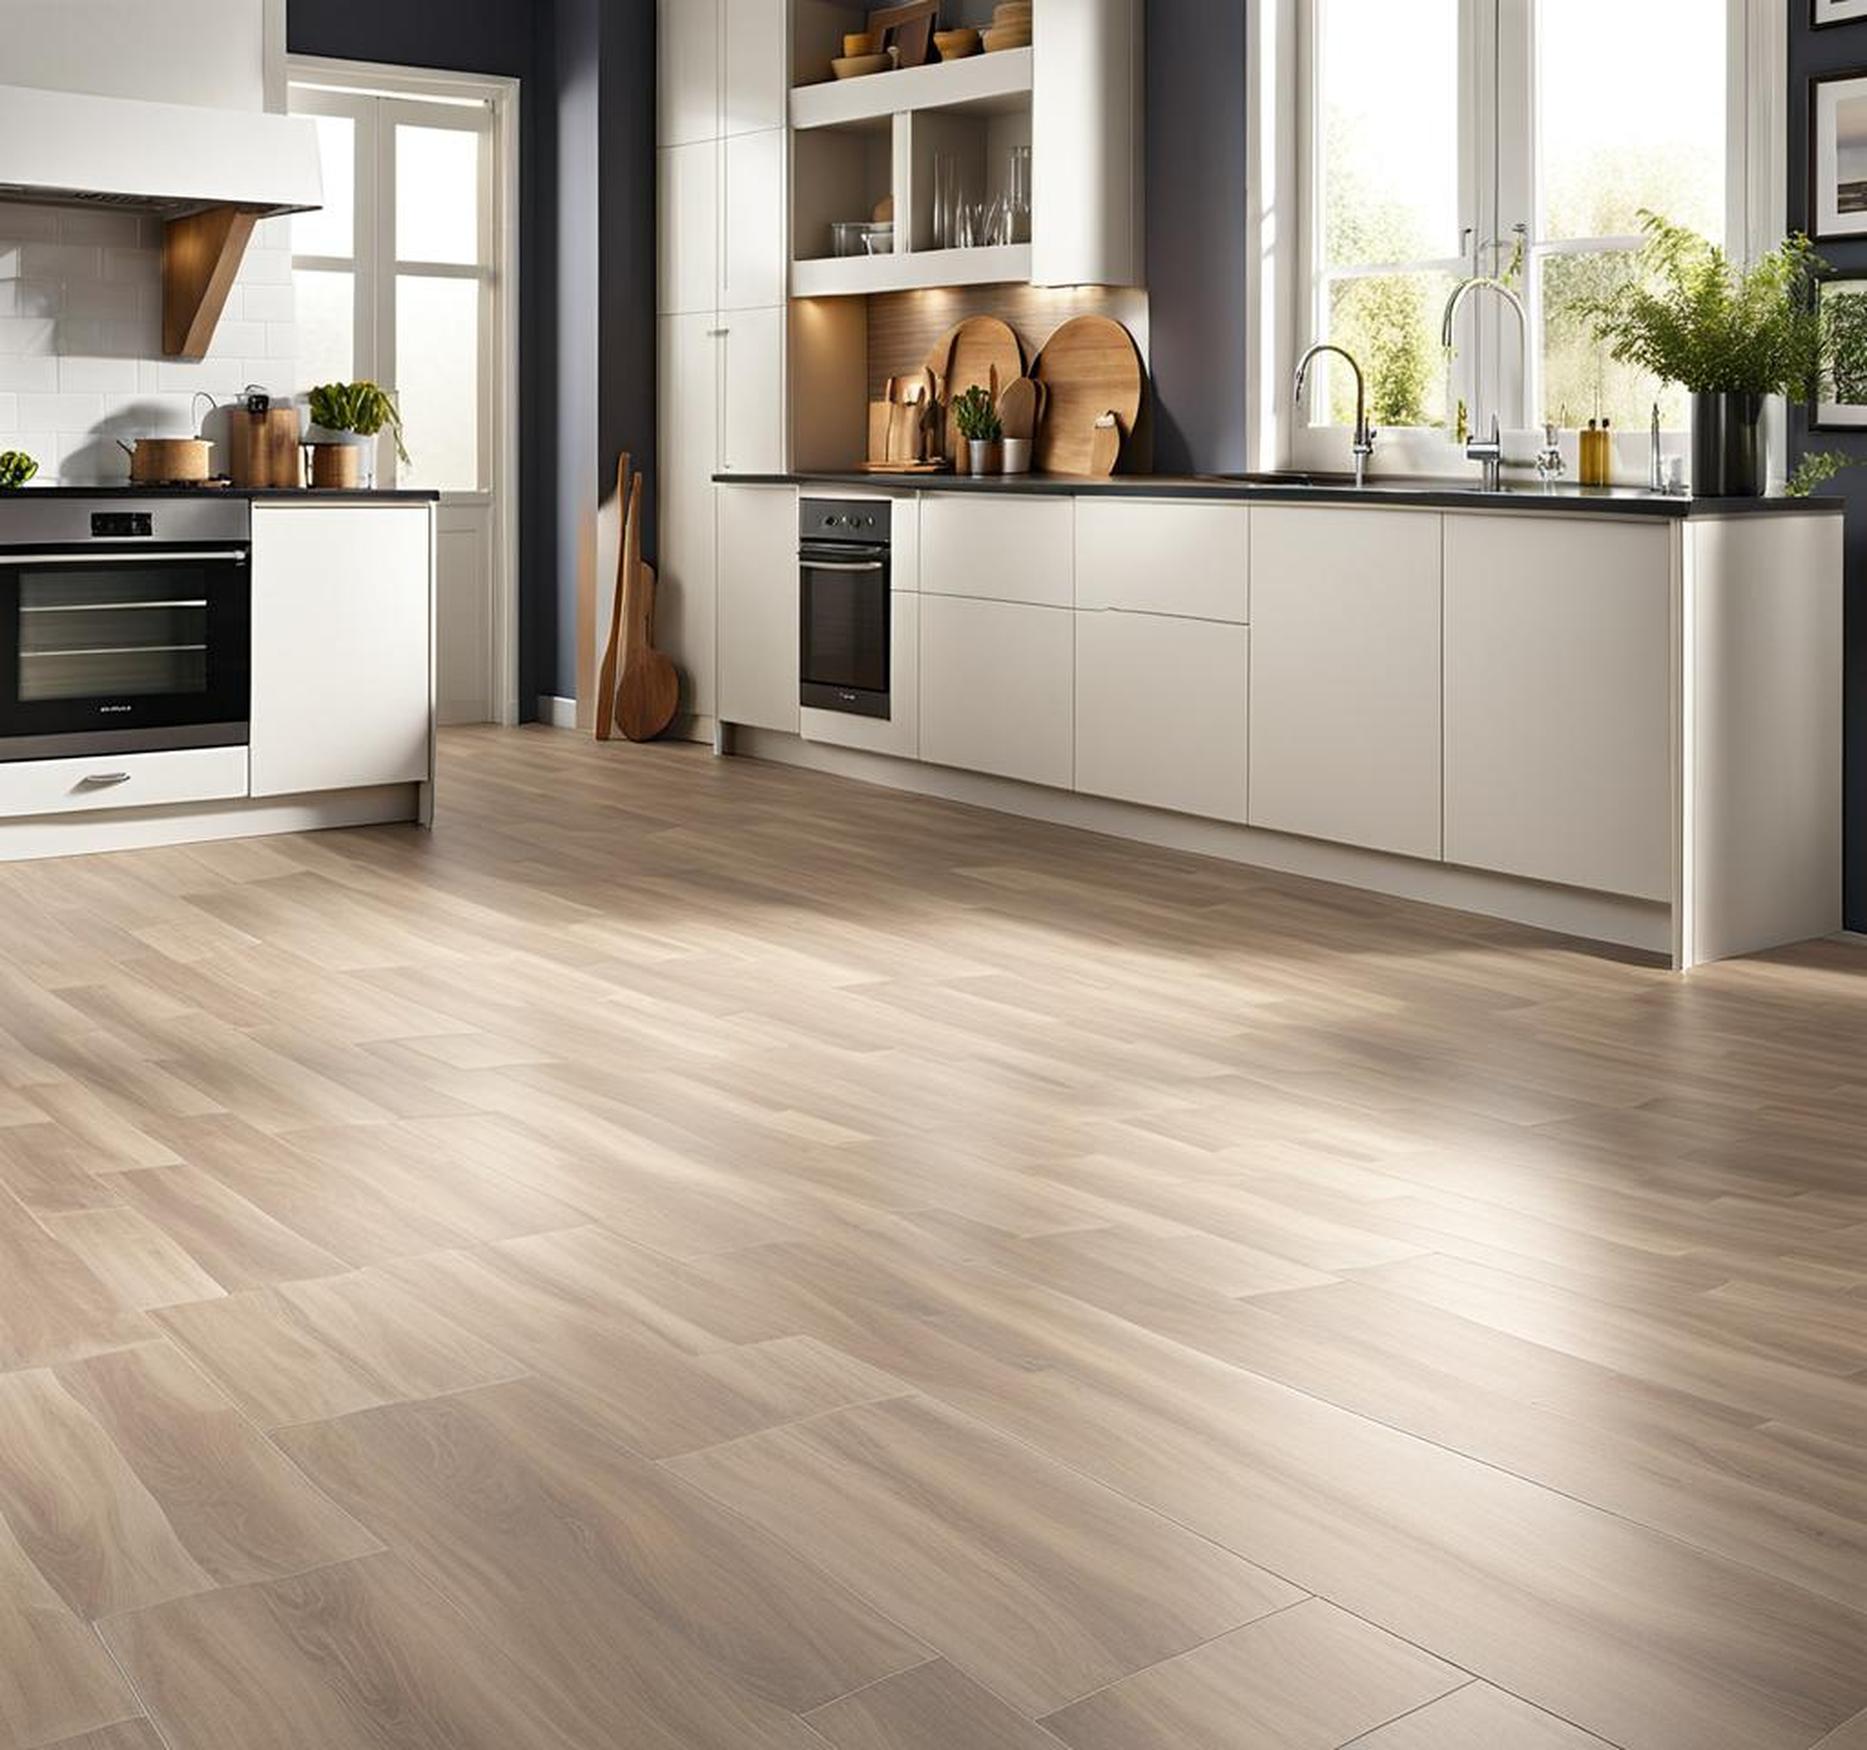 kitchen laminate flooring tile effect